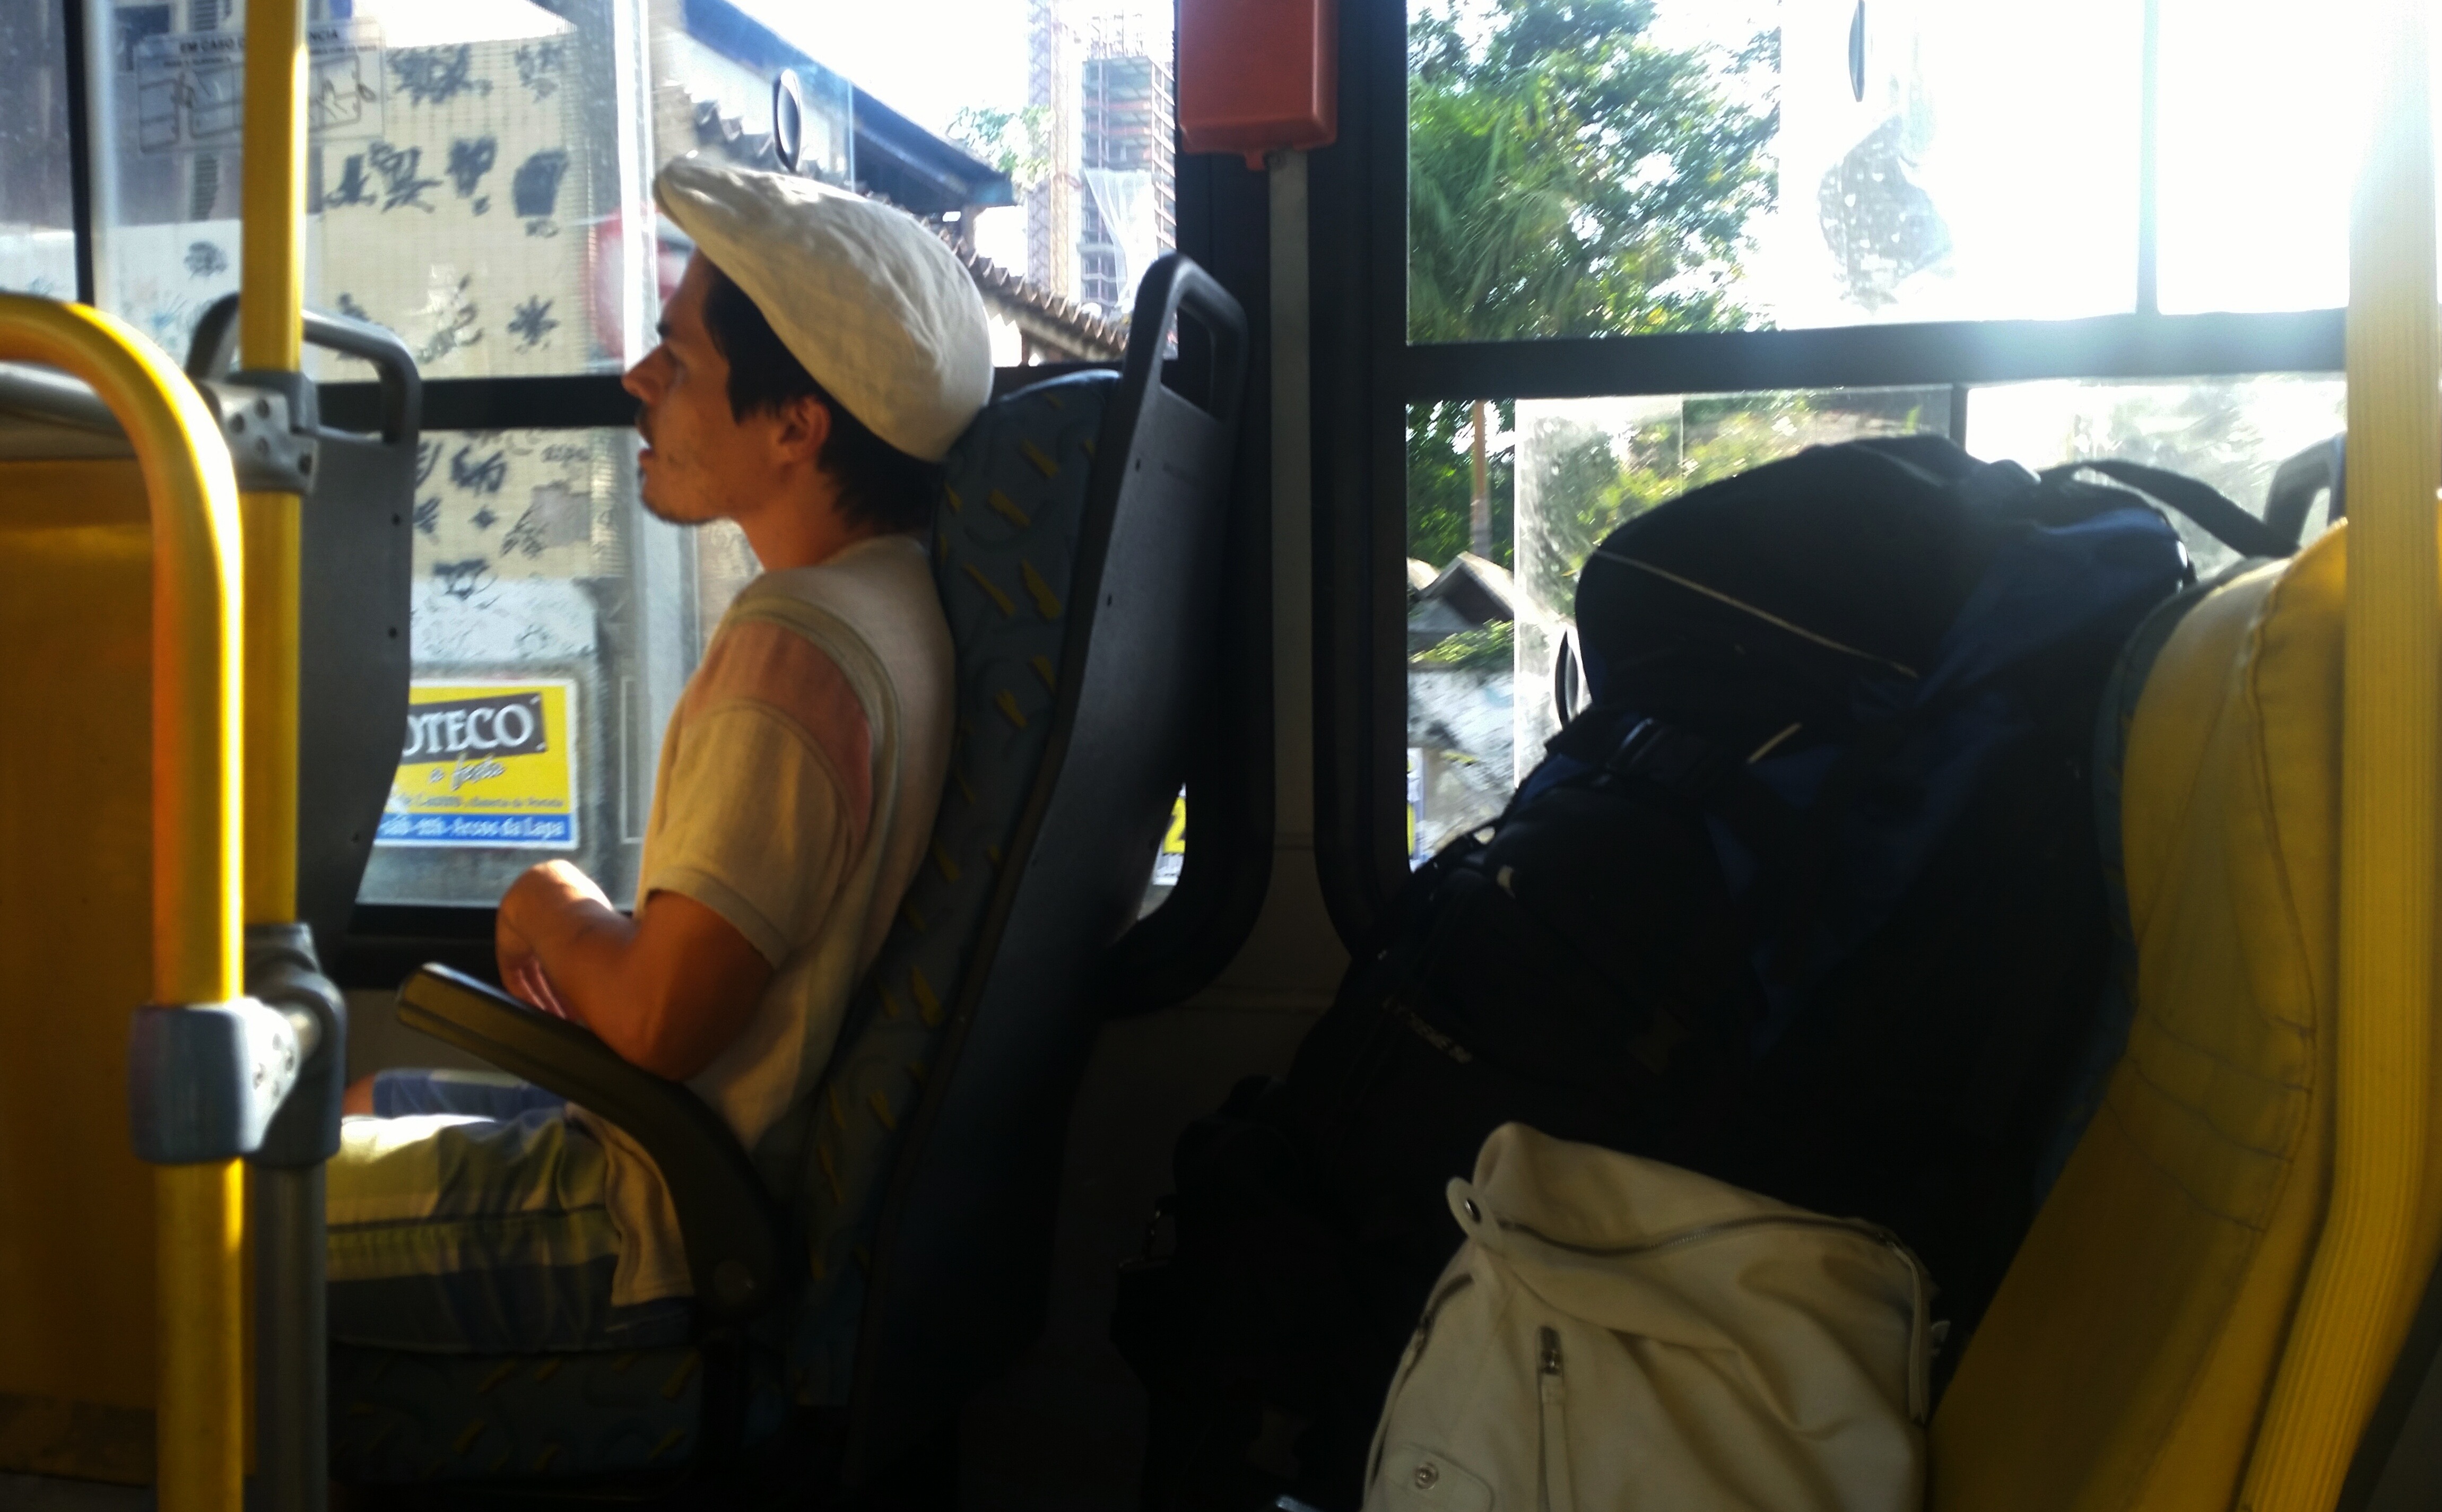 Public transport in Rio de Janeiro